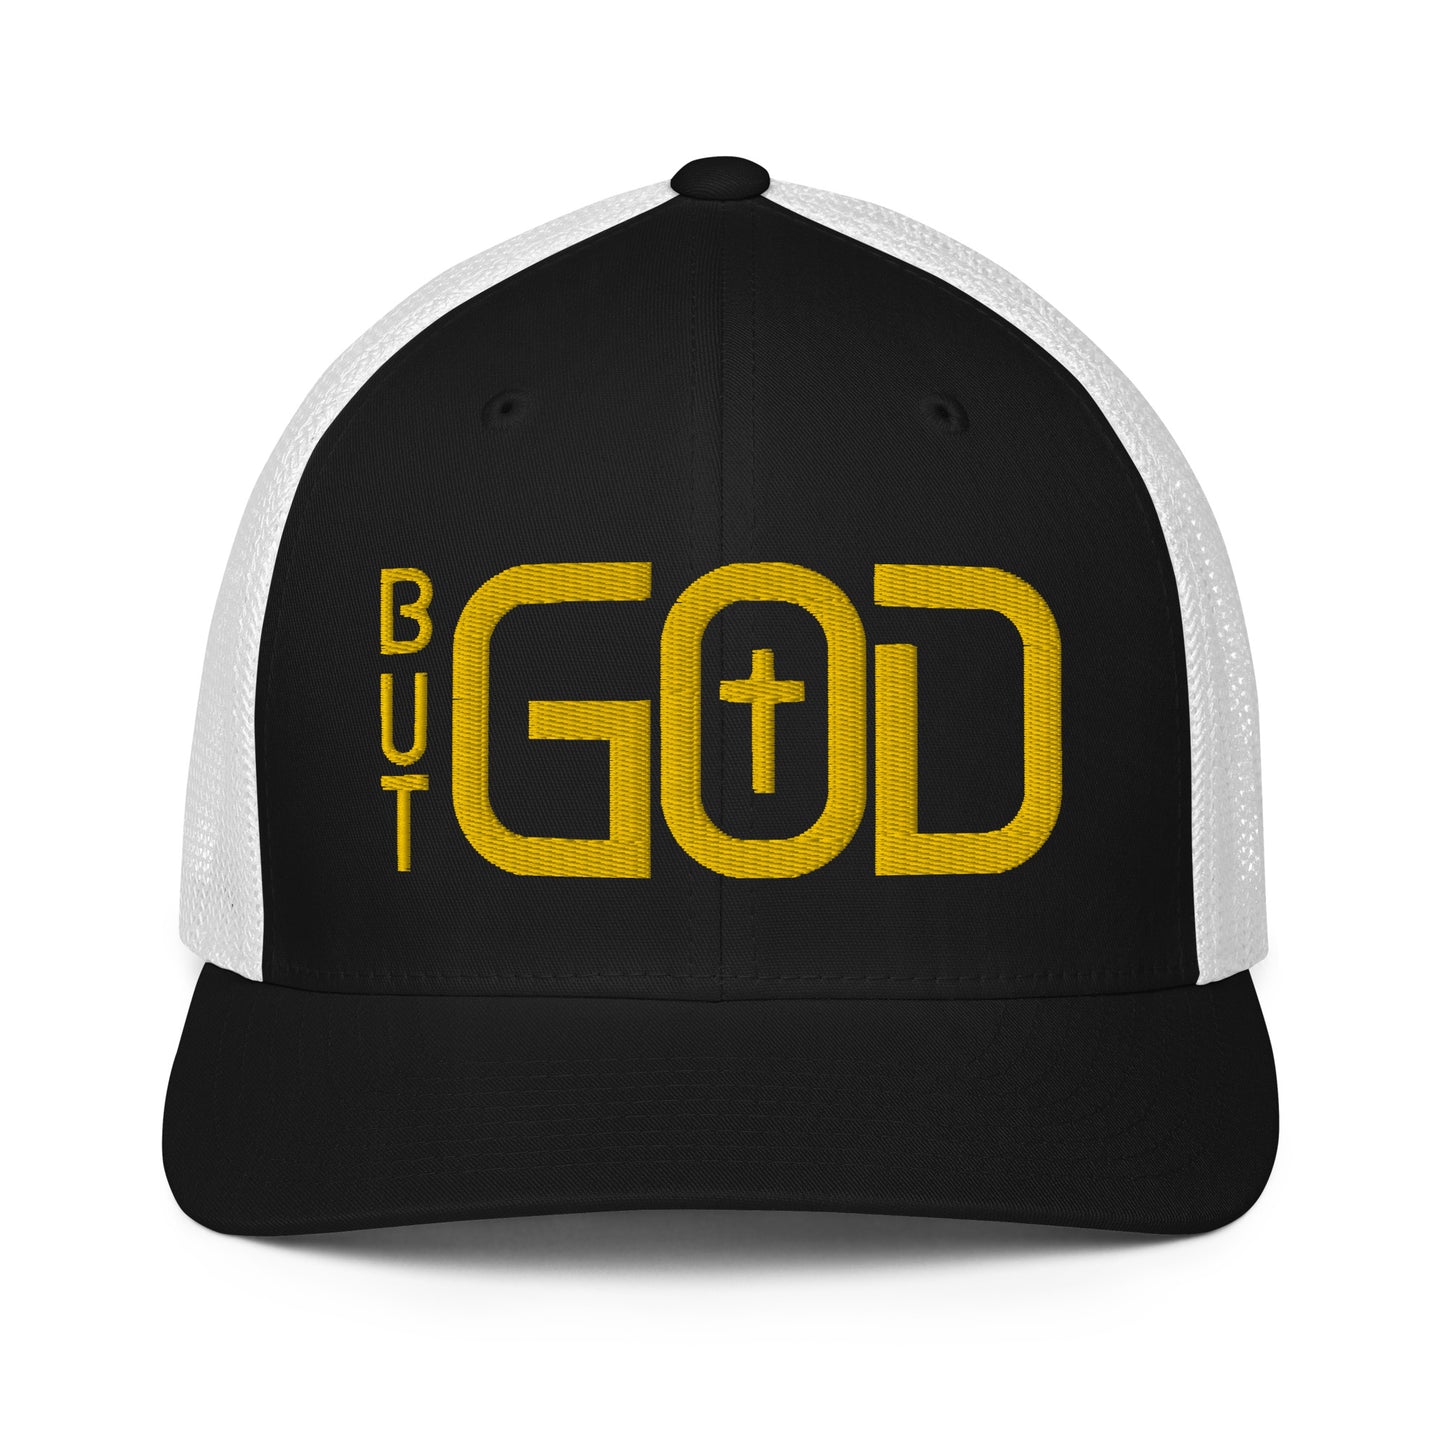 But GOD - Many Colors Mesh back trucker cap